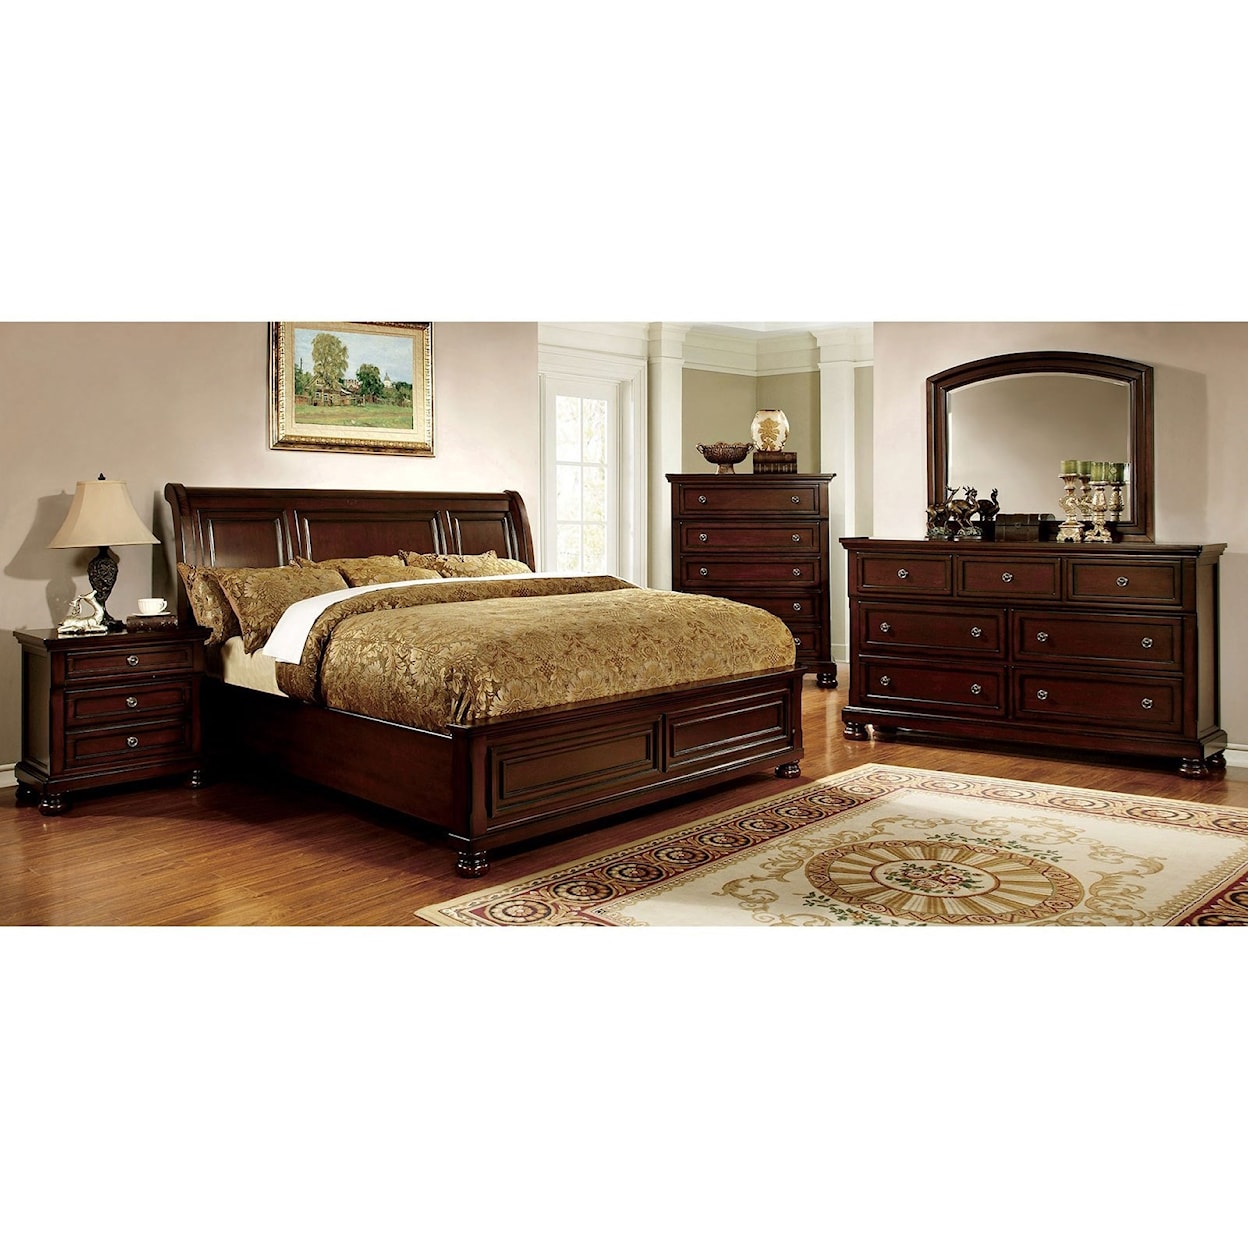 Furniture of America Northville King Bedroom Group